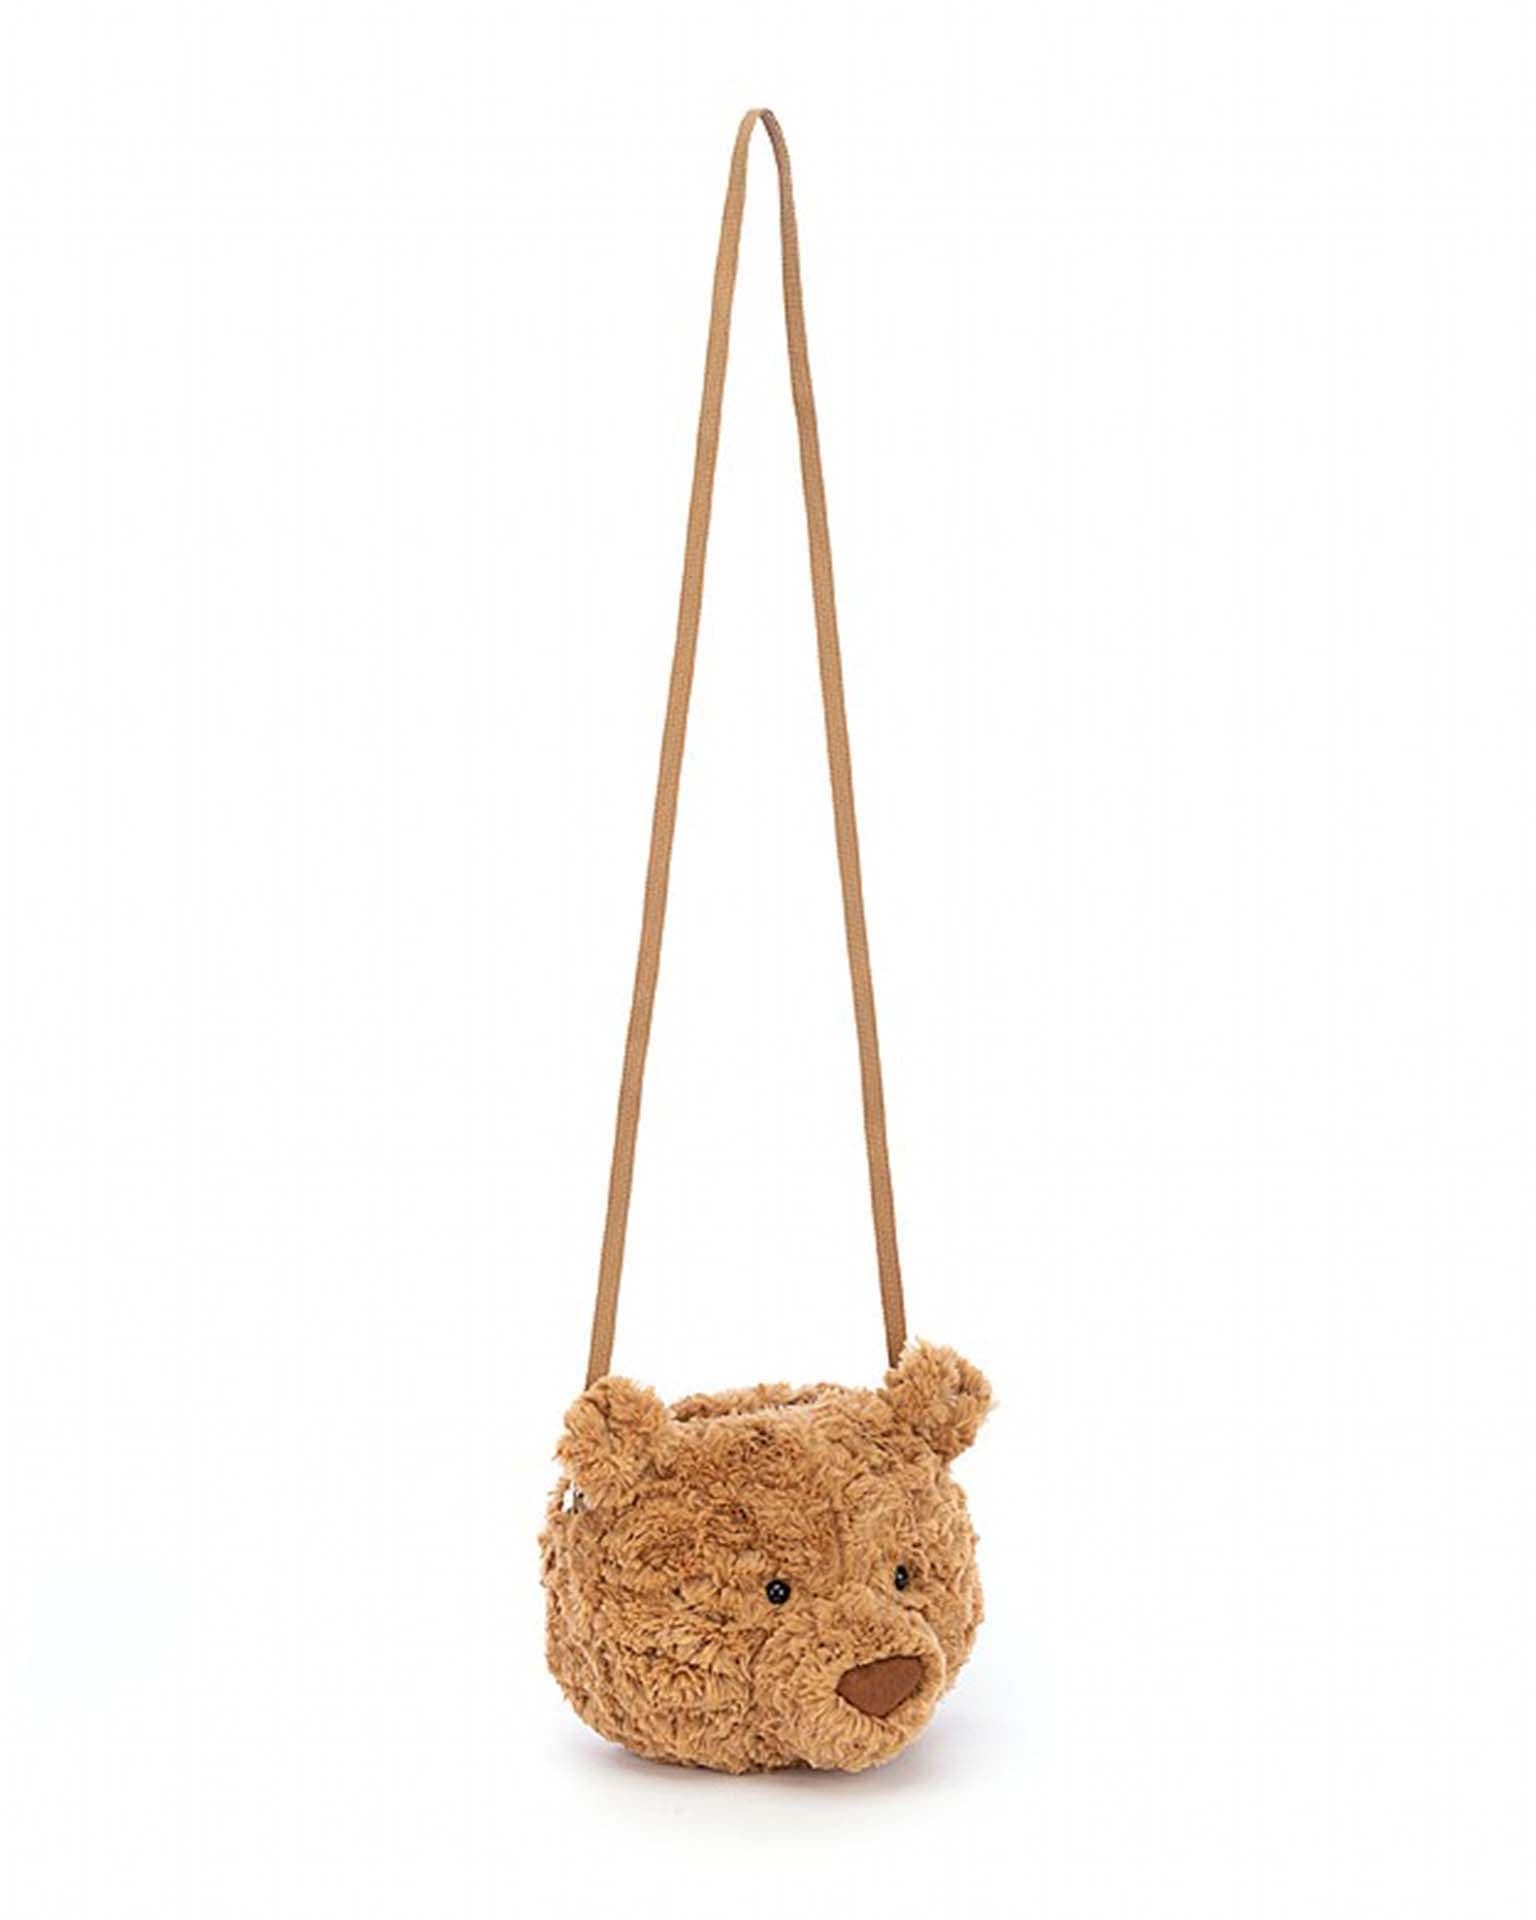 Jellycat Barthlomew Bear Bag Charm